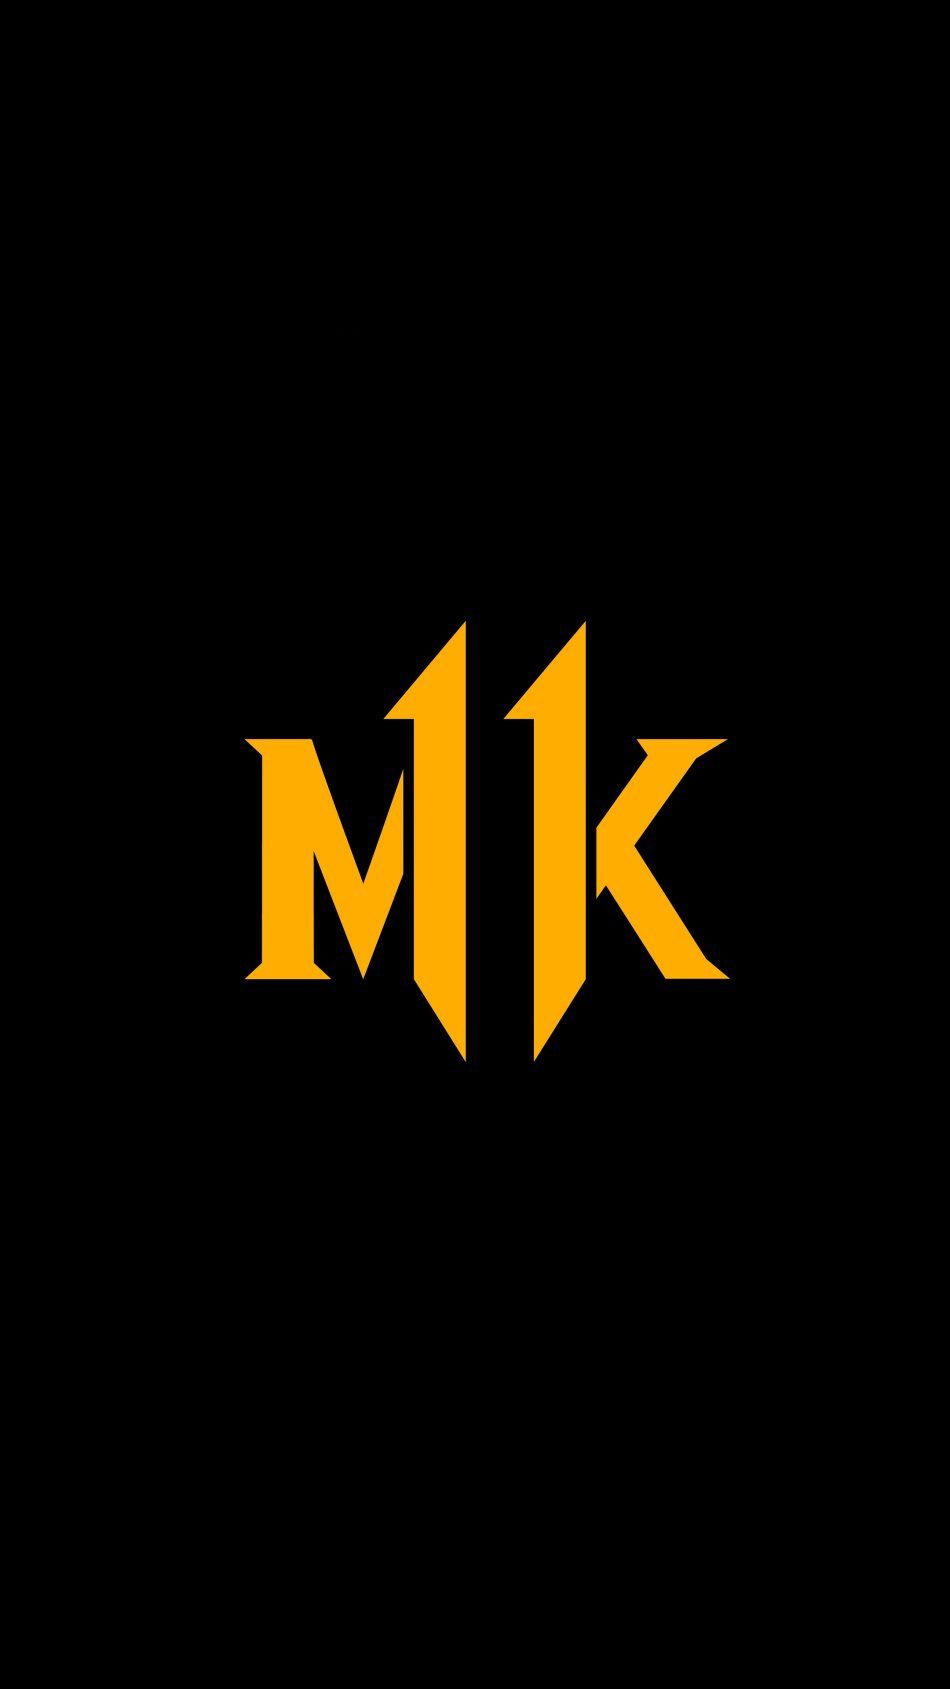 Mortal Kombat Minimal 4k Ultra HD Mobile Wallpaper